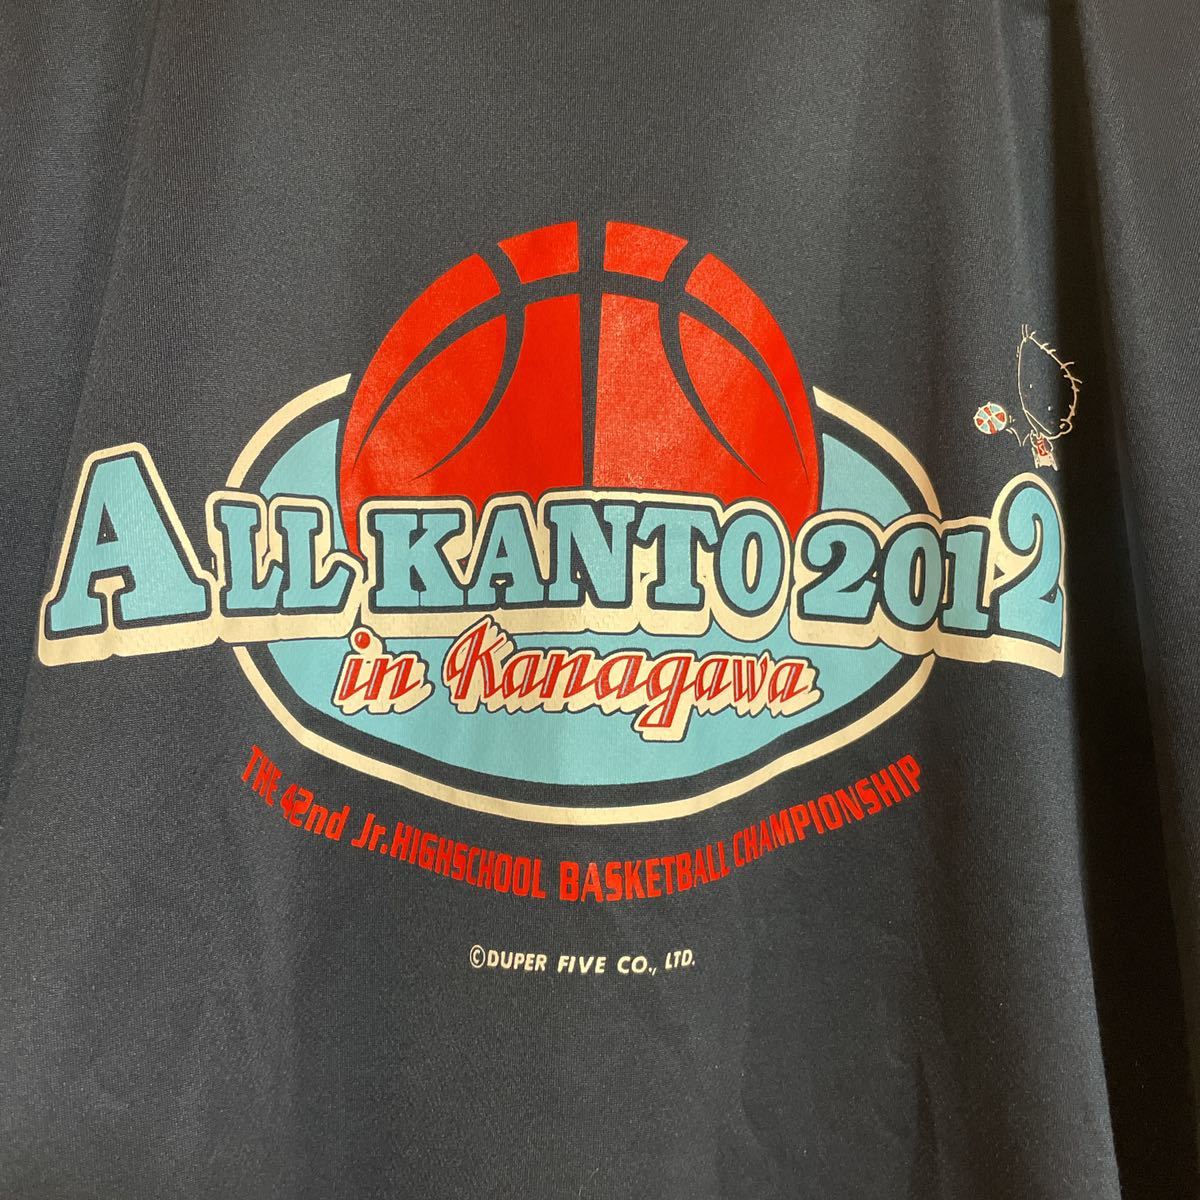 ALL KANTO 2012 神奈川大会 2012 42回 ジュニアハイスクール バスケットボール大会 半袖Tシャツ Tシャツ サイズL_画像2